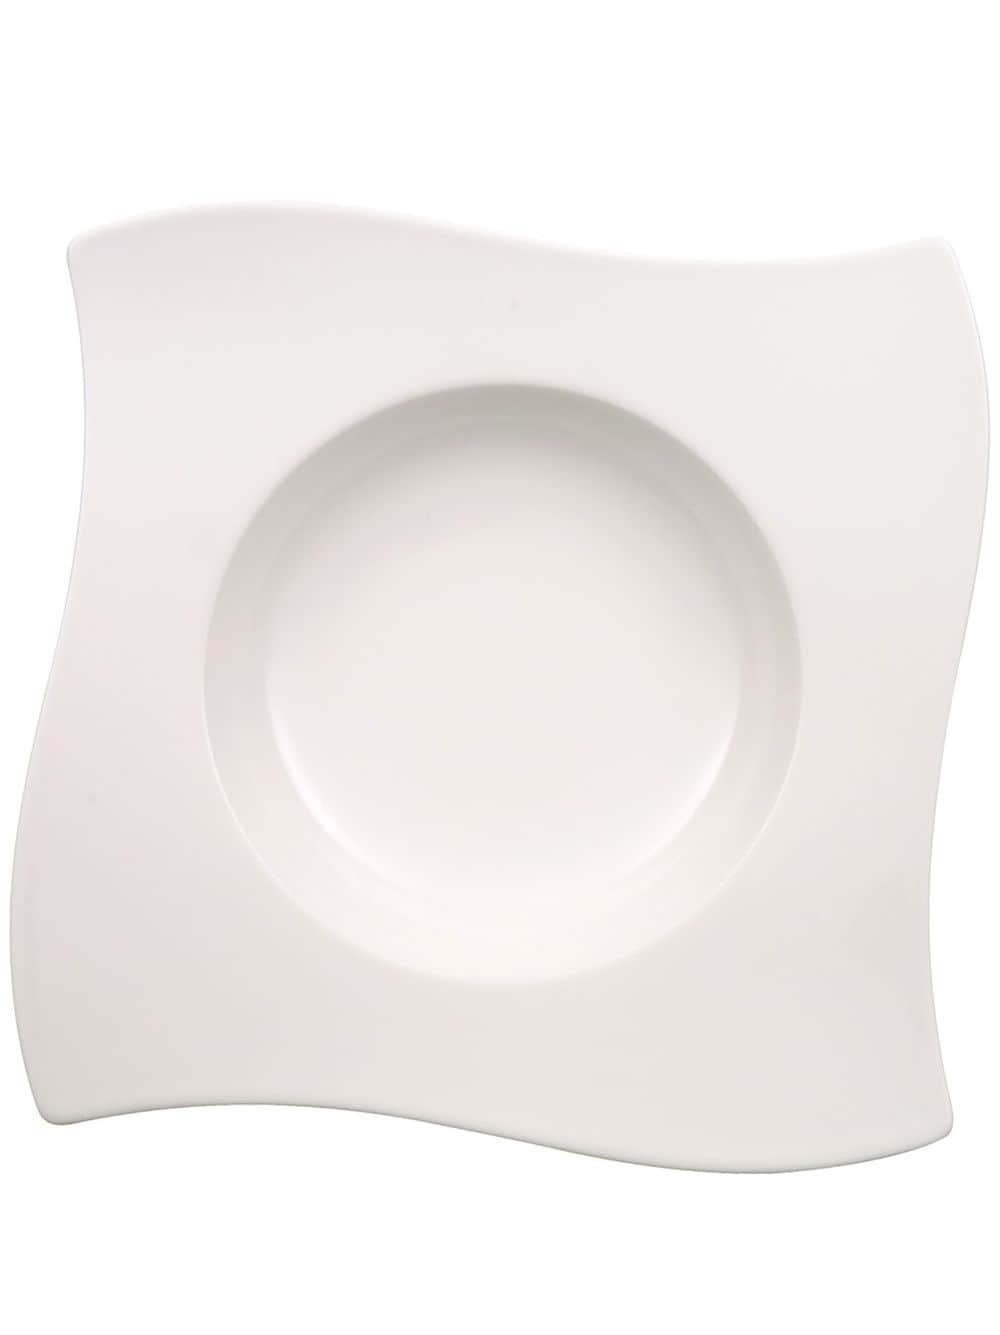 Villeroy & Boch NewWave porcelain plate (set of 6) - White von Villeroy & Boch